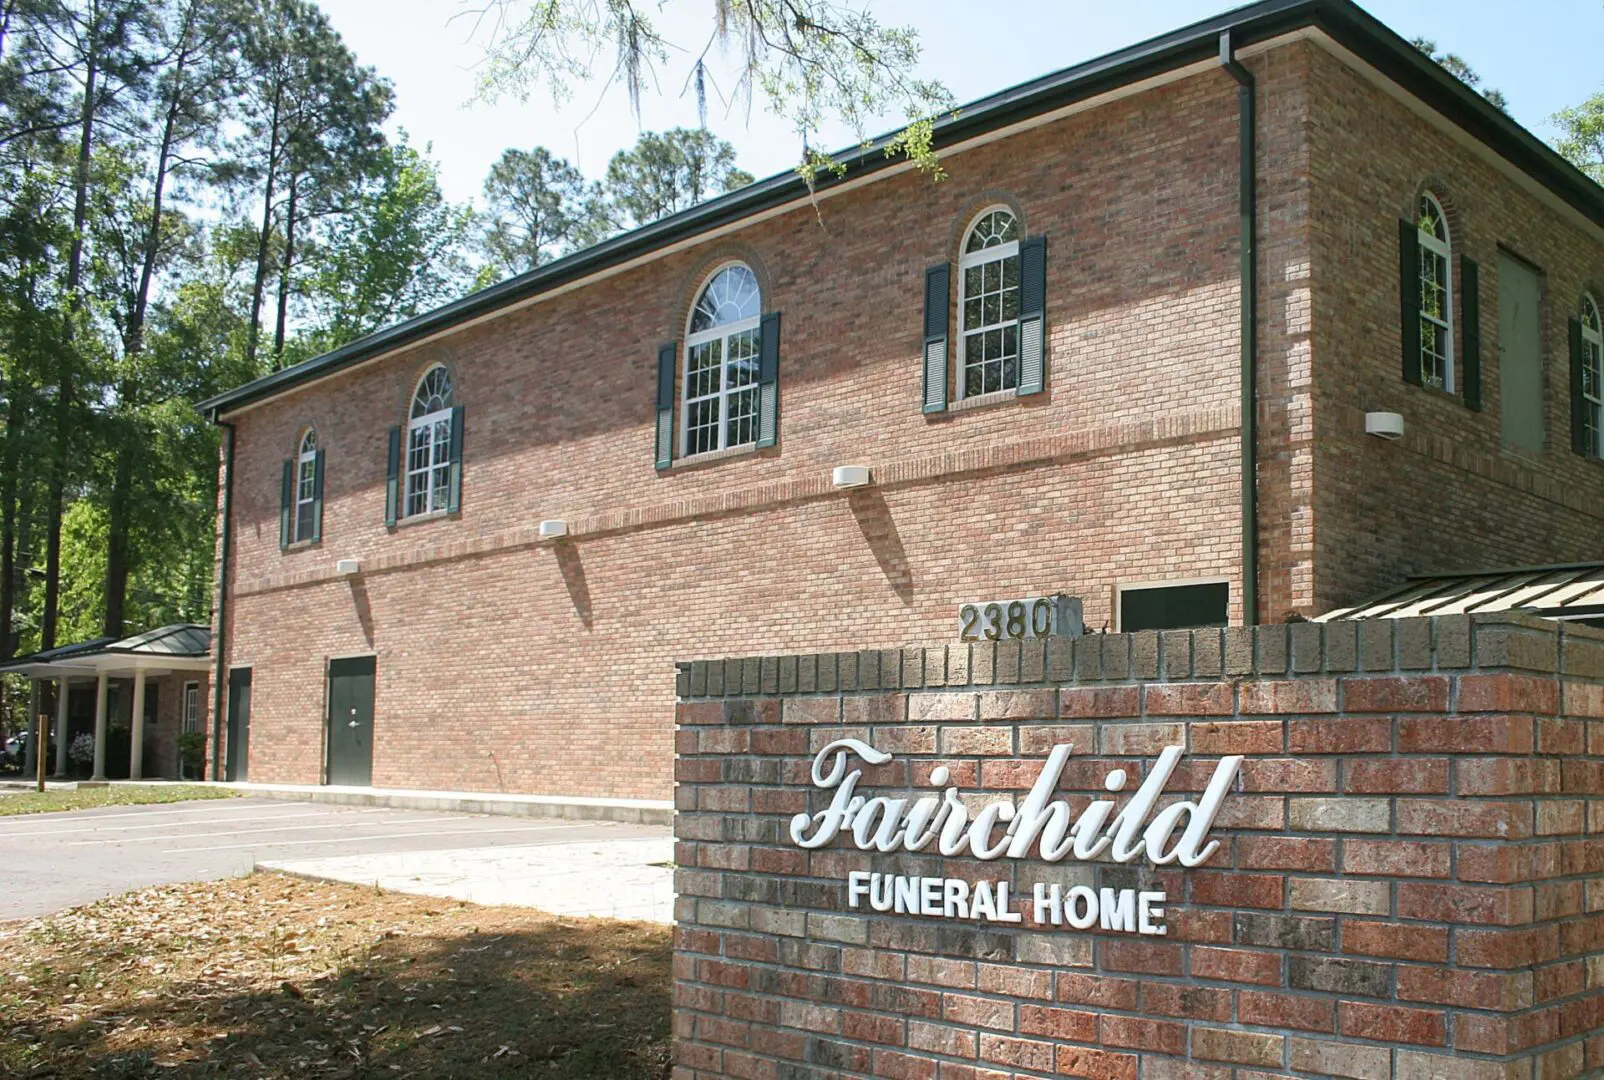 Fairchild Funeral Home Board Brick Wall